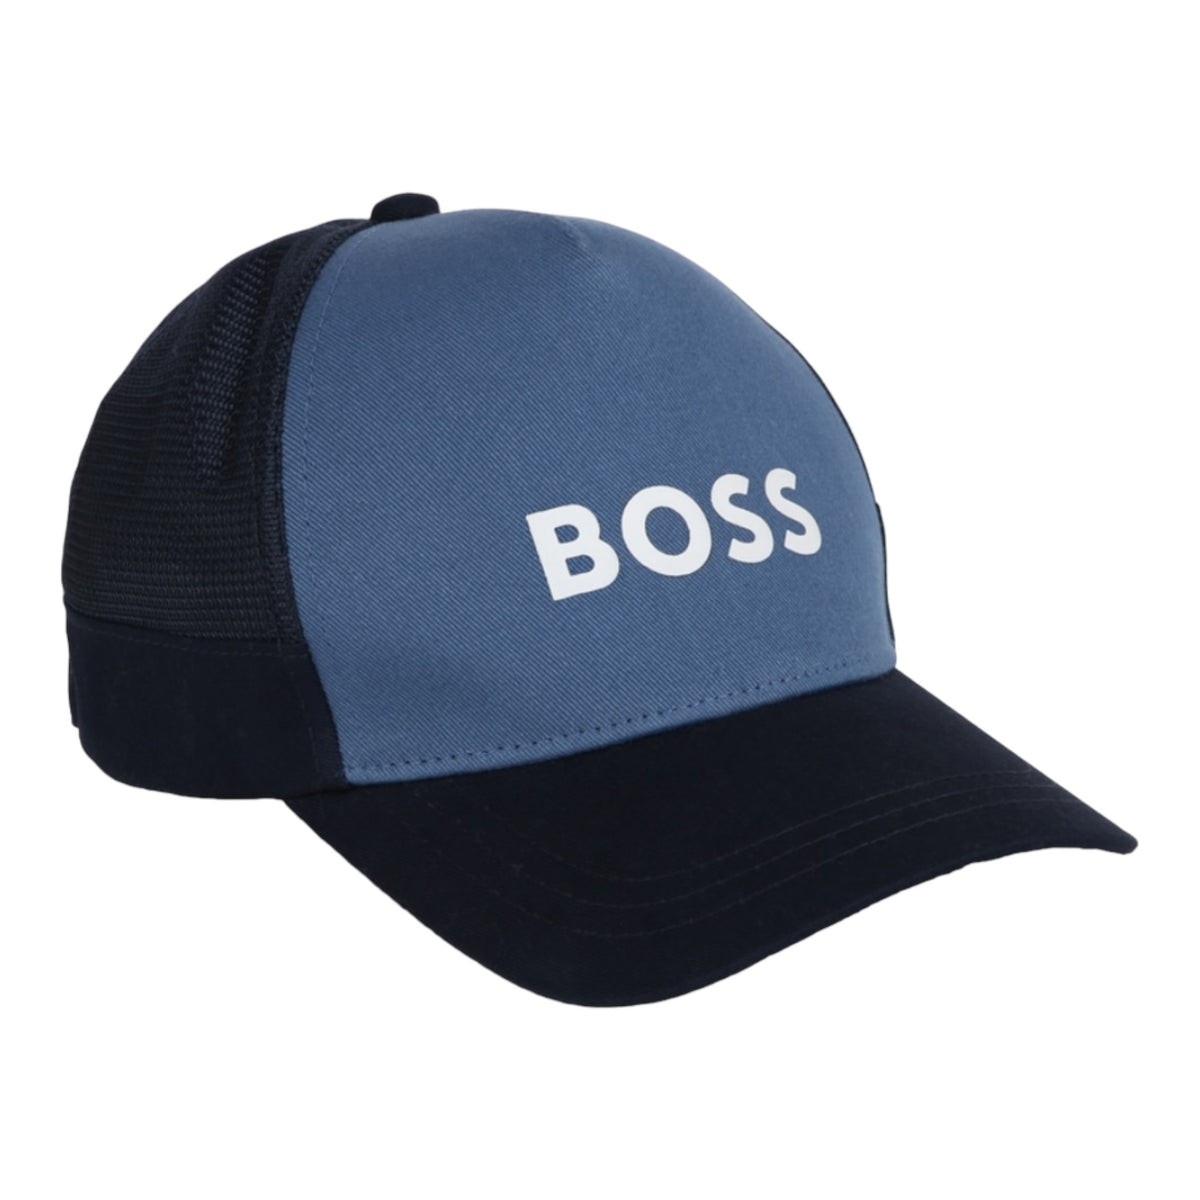 Hugo Boss Kids Cotton/Mesh Trucker Cap